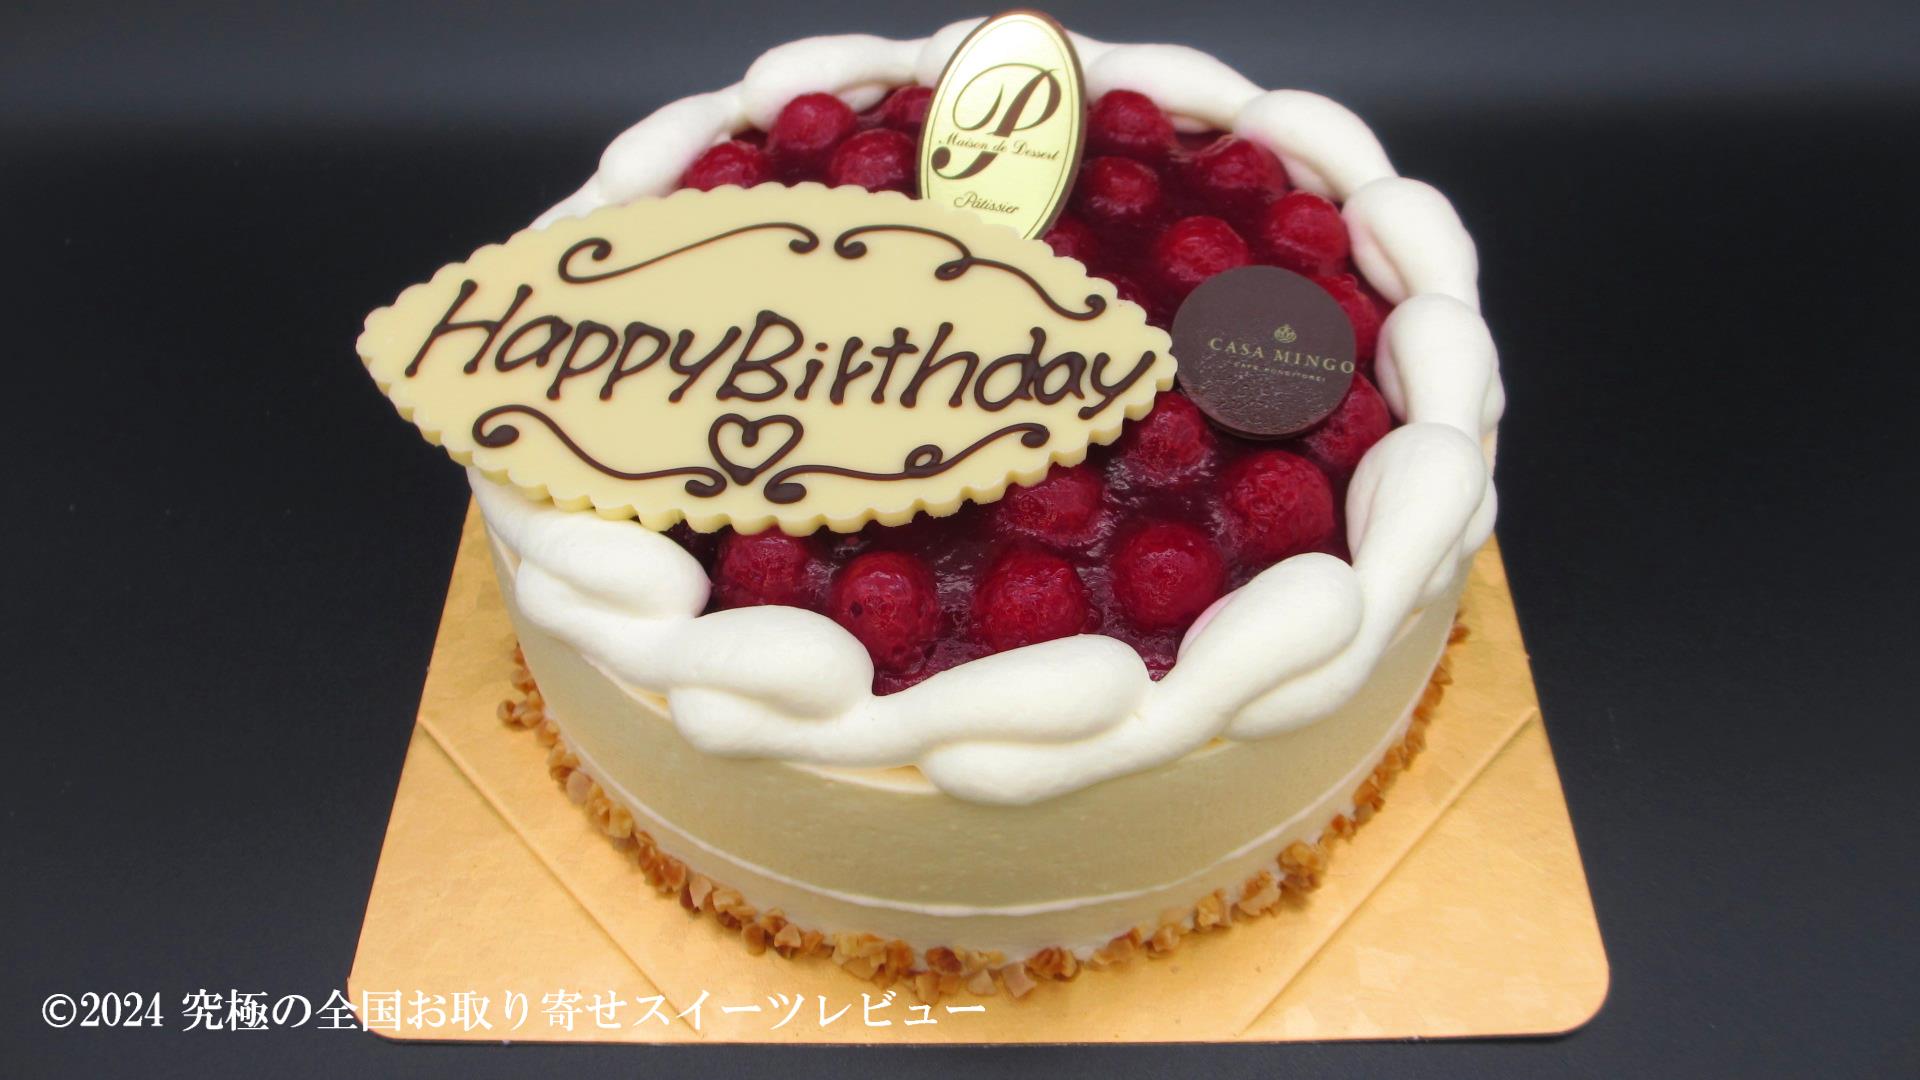 HappyBirthdayのホワイトチョコのプレートがのったシュス木苺レアチーズケーキの画像